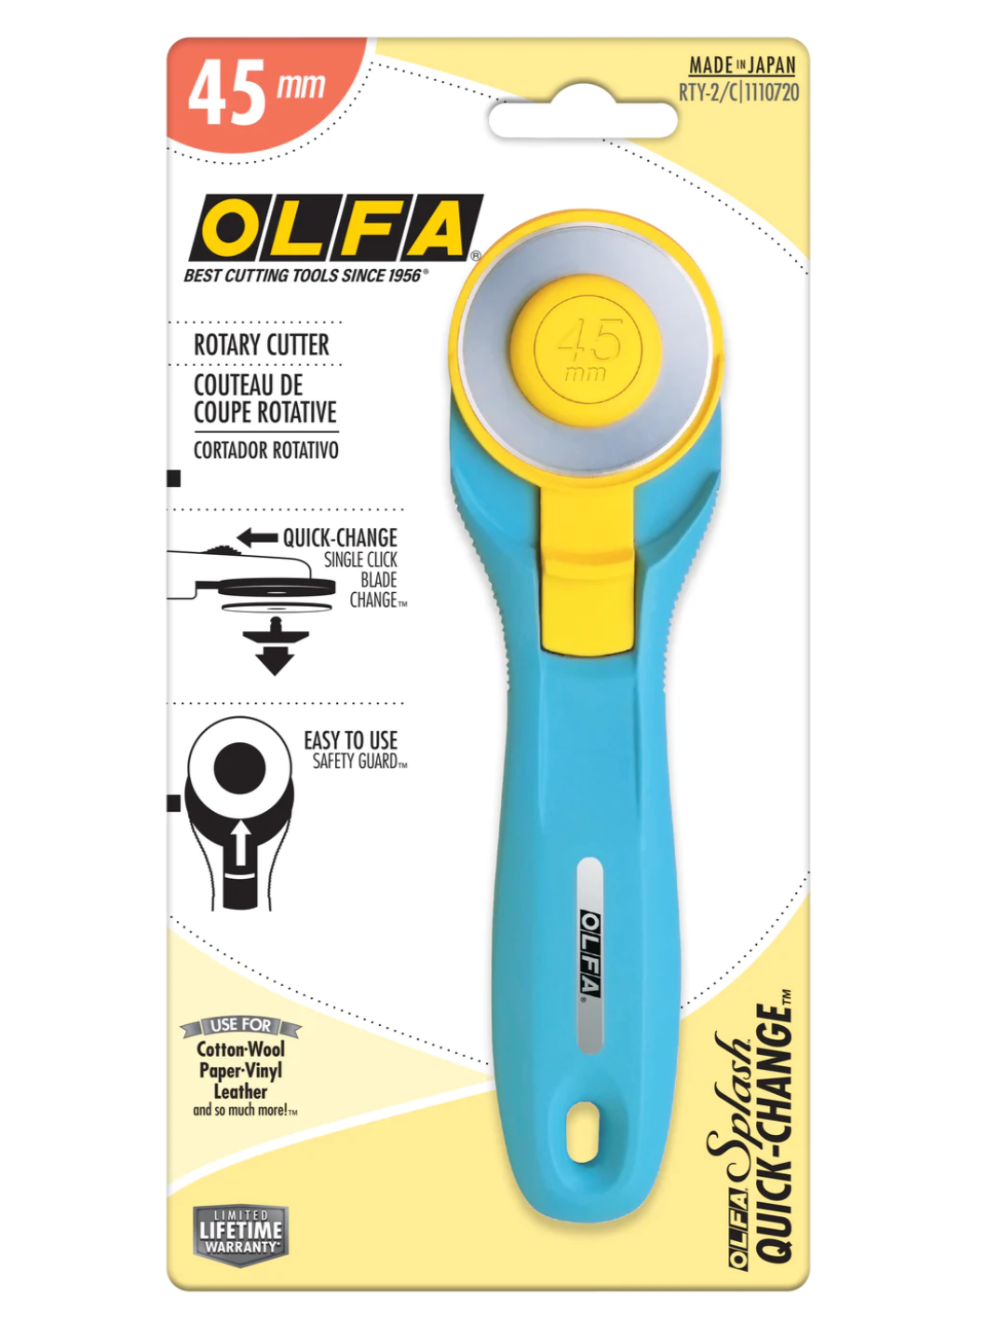 OLFA Rotary Cutter